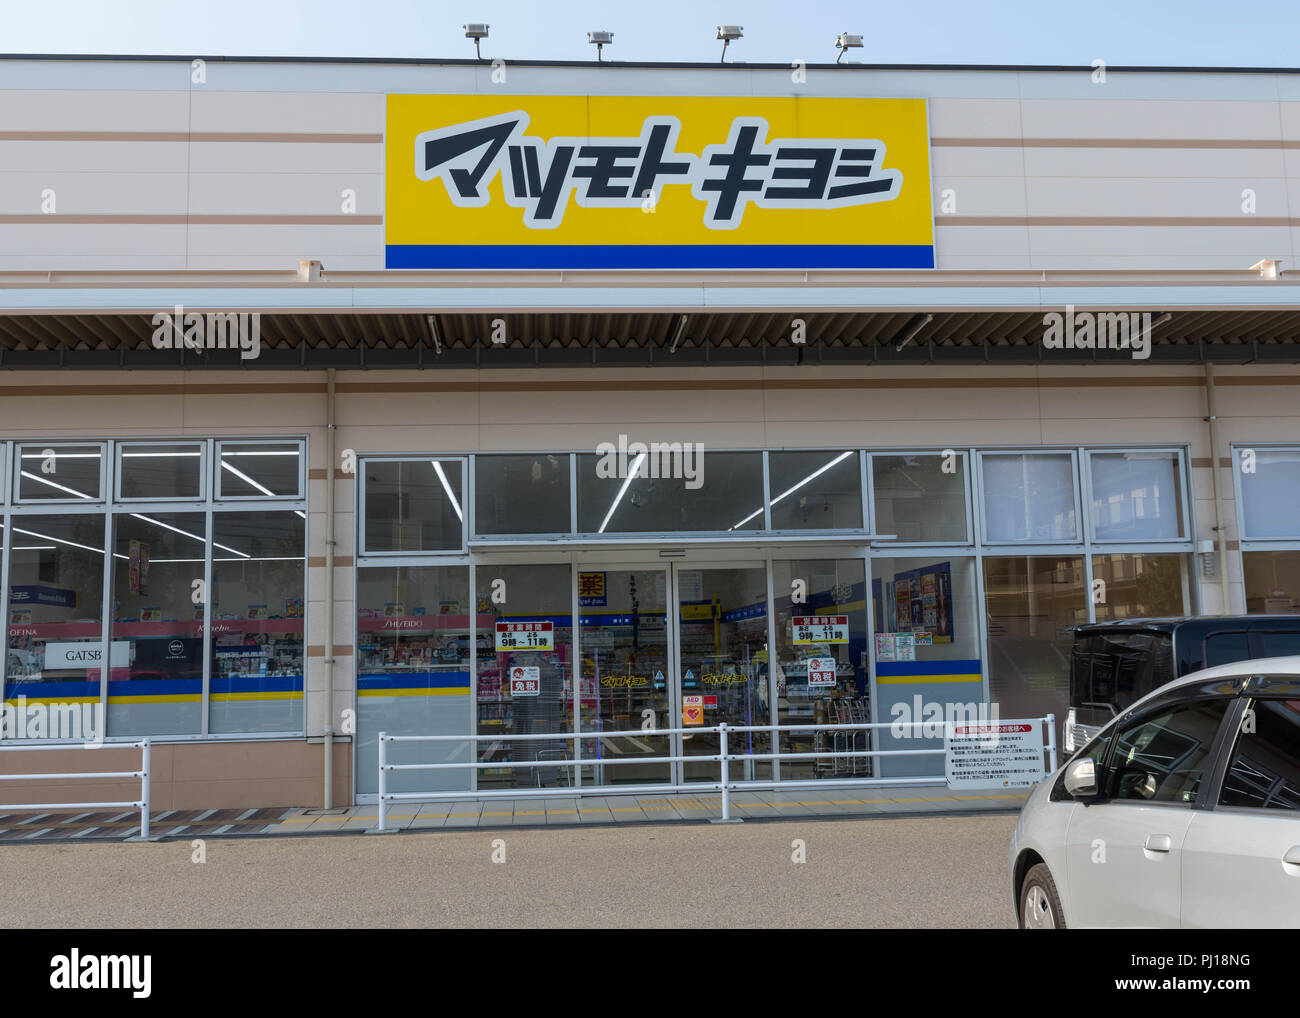 Matsumoto Kiyoshi - The largest drugstore or pharmacy chain in Japan. Stock Photo